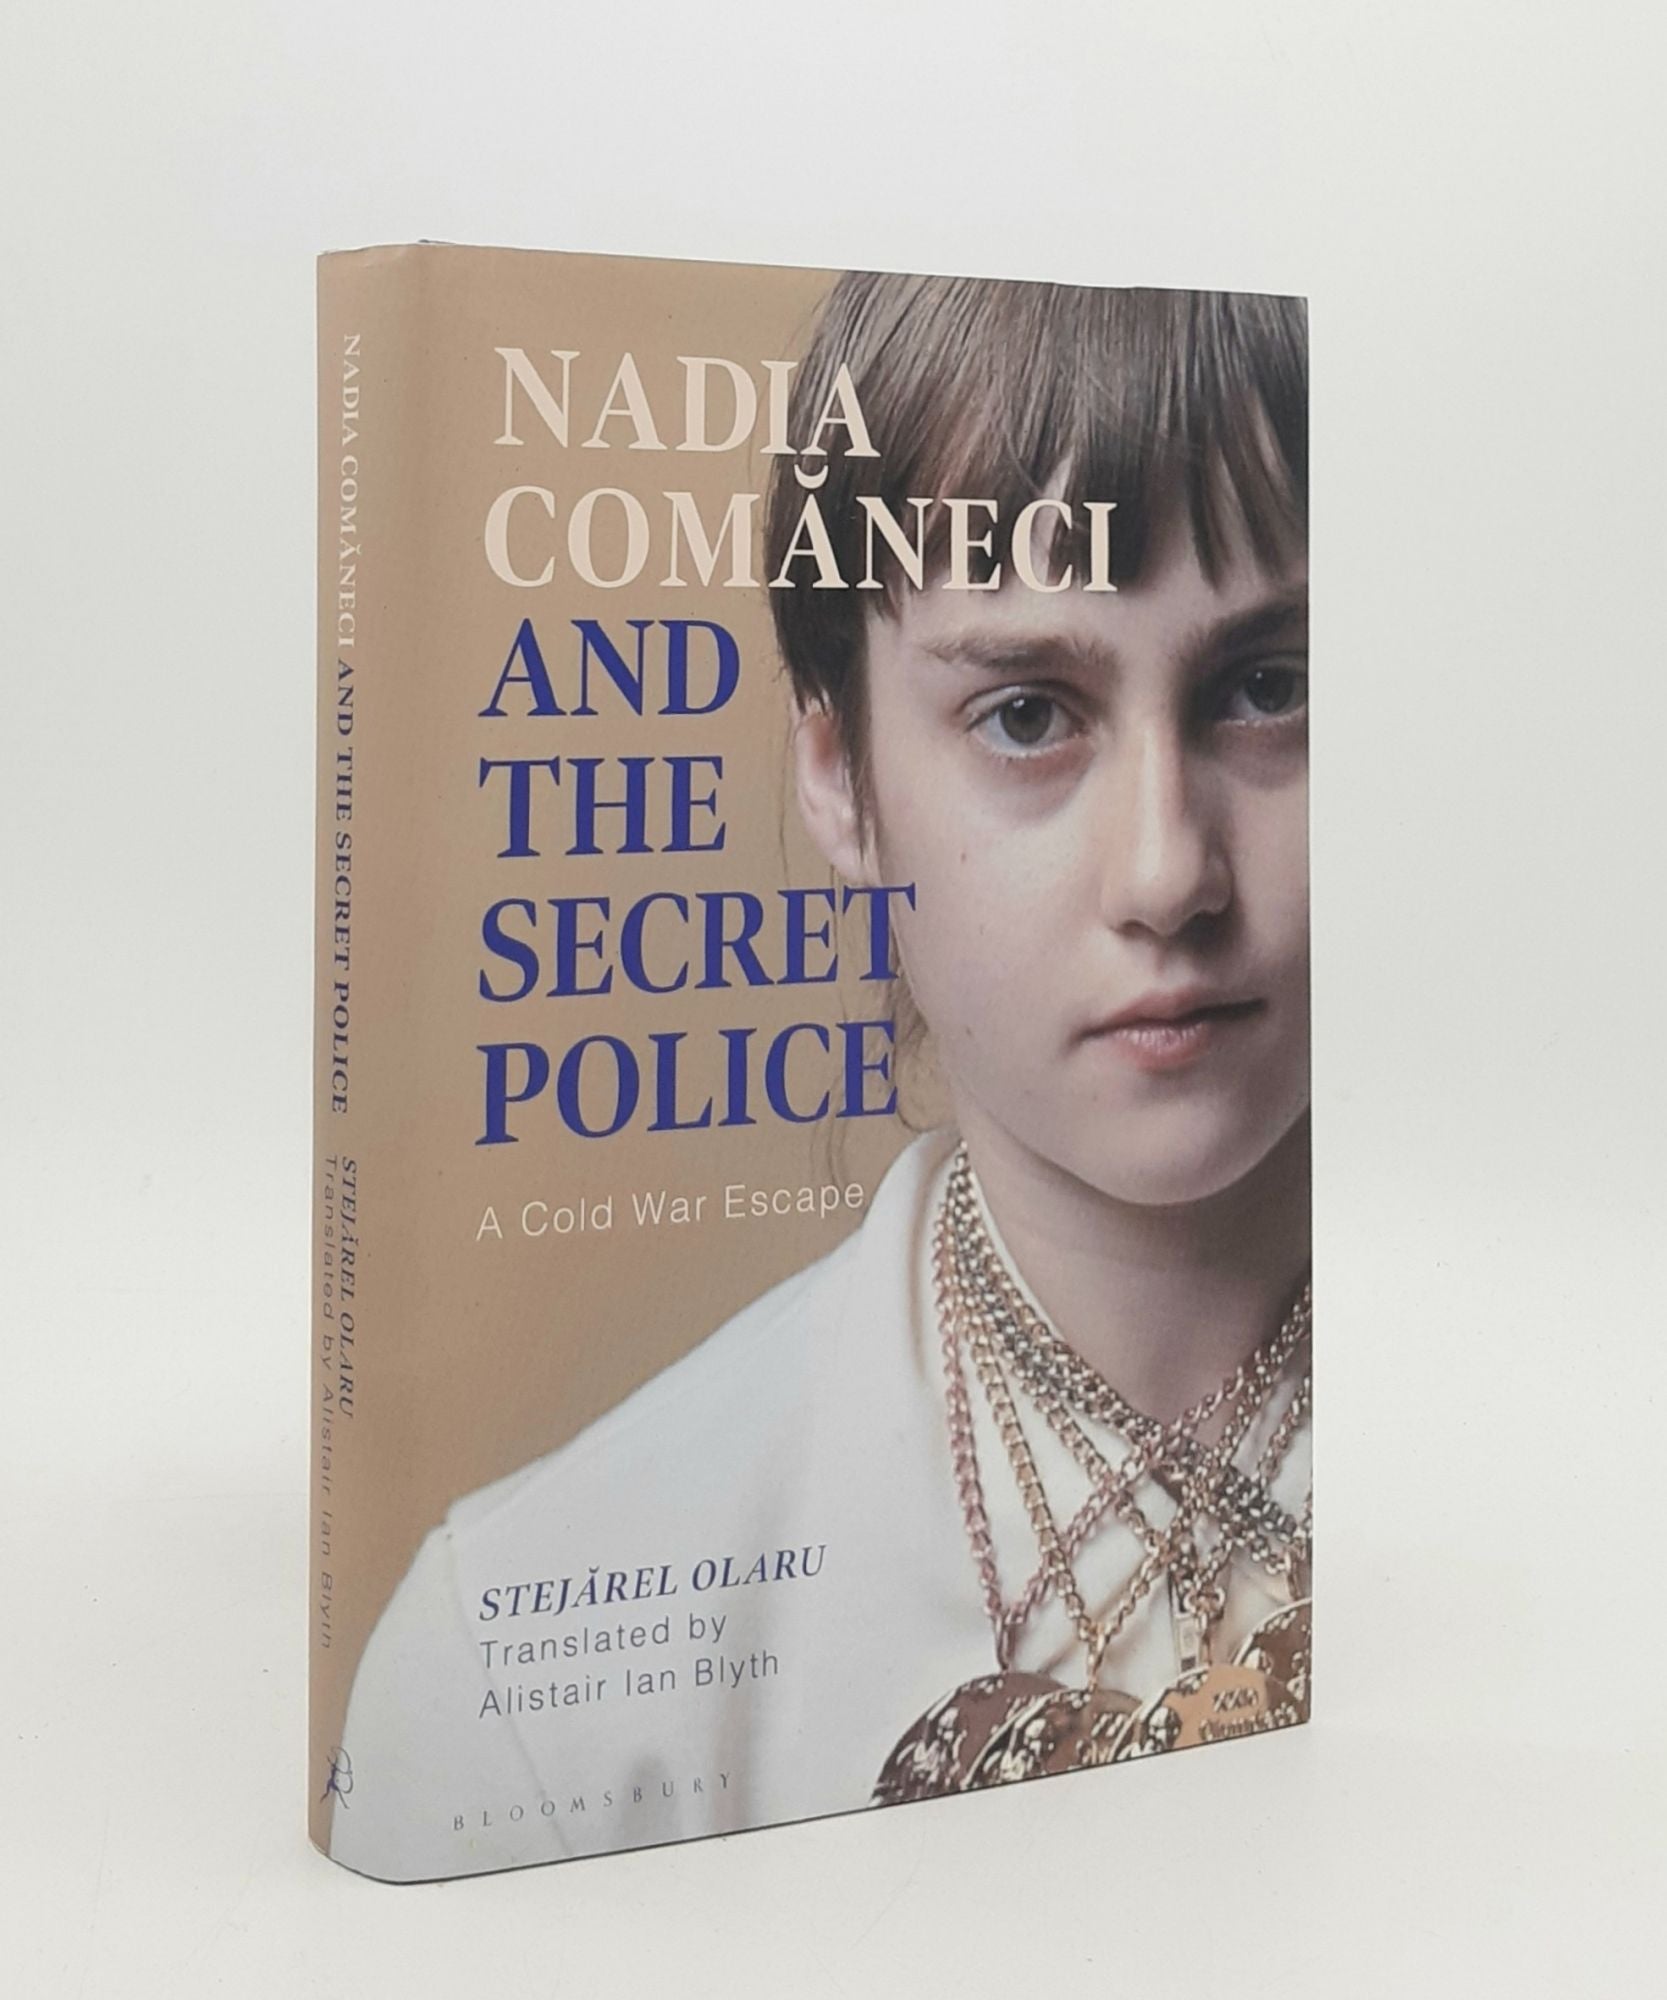 OLARU Stejarel, BLYTH Alistair Ian - Nadia Comaneci and the Secret Police a Cold War Escape